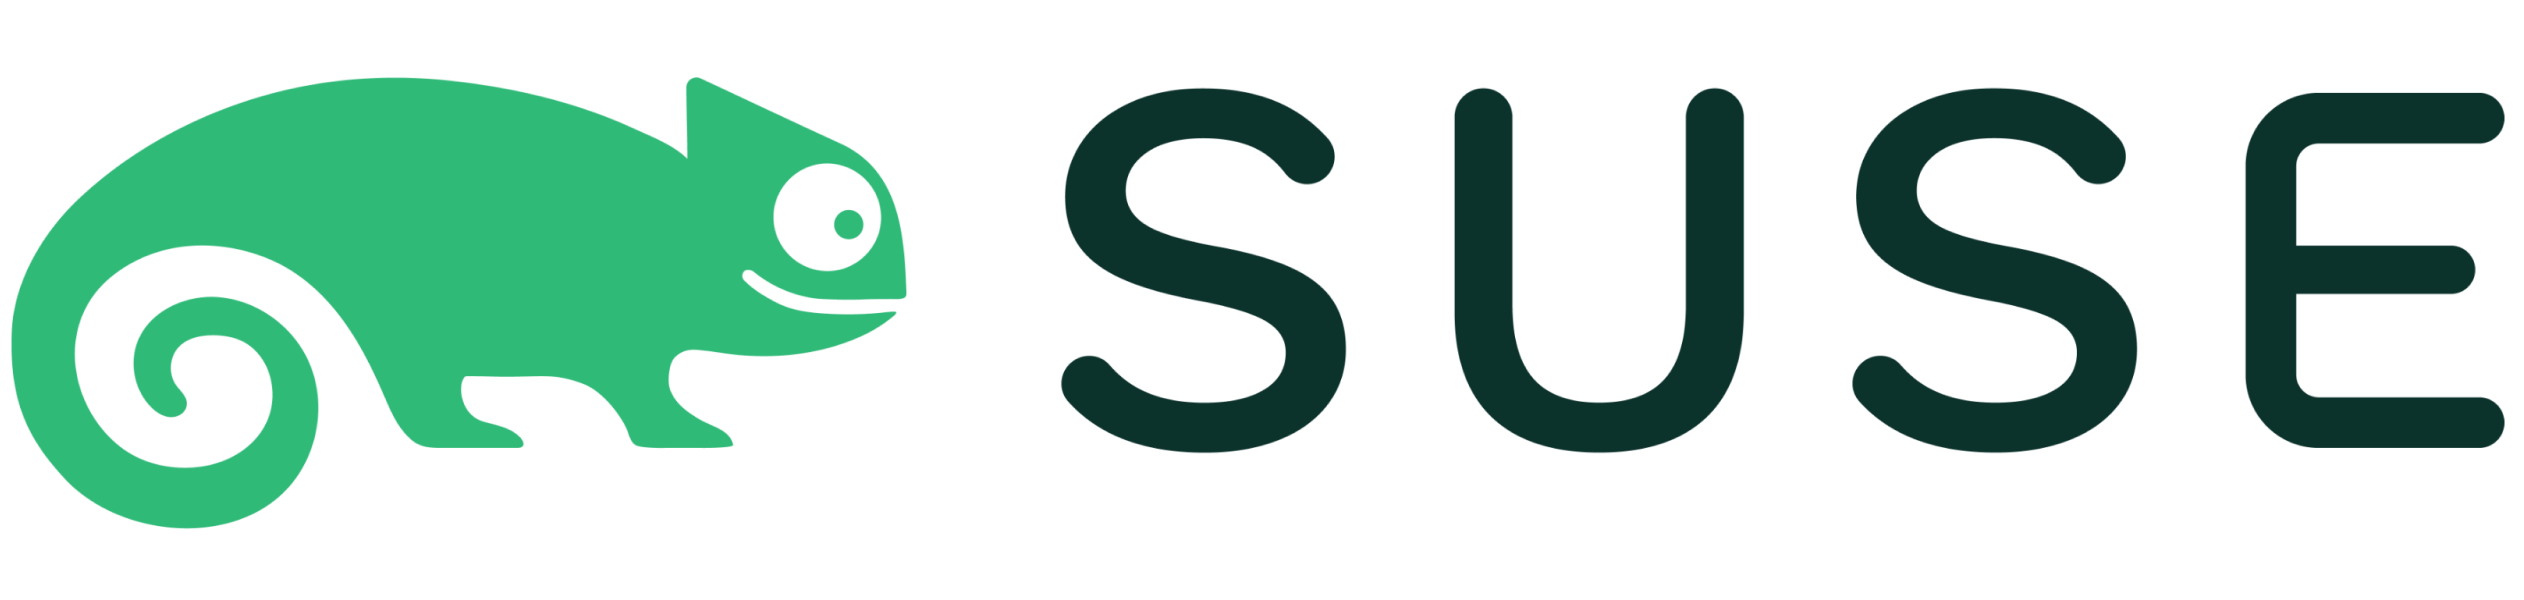 Suse Conference Sponsor